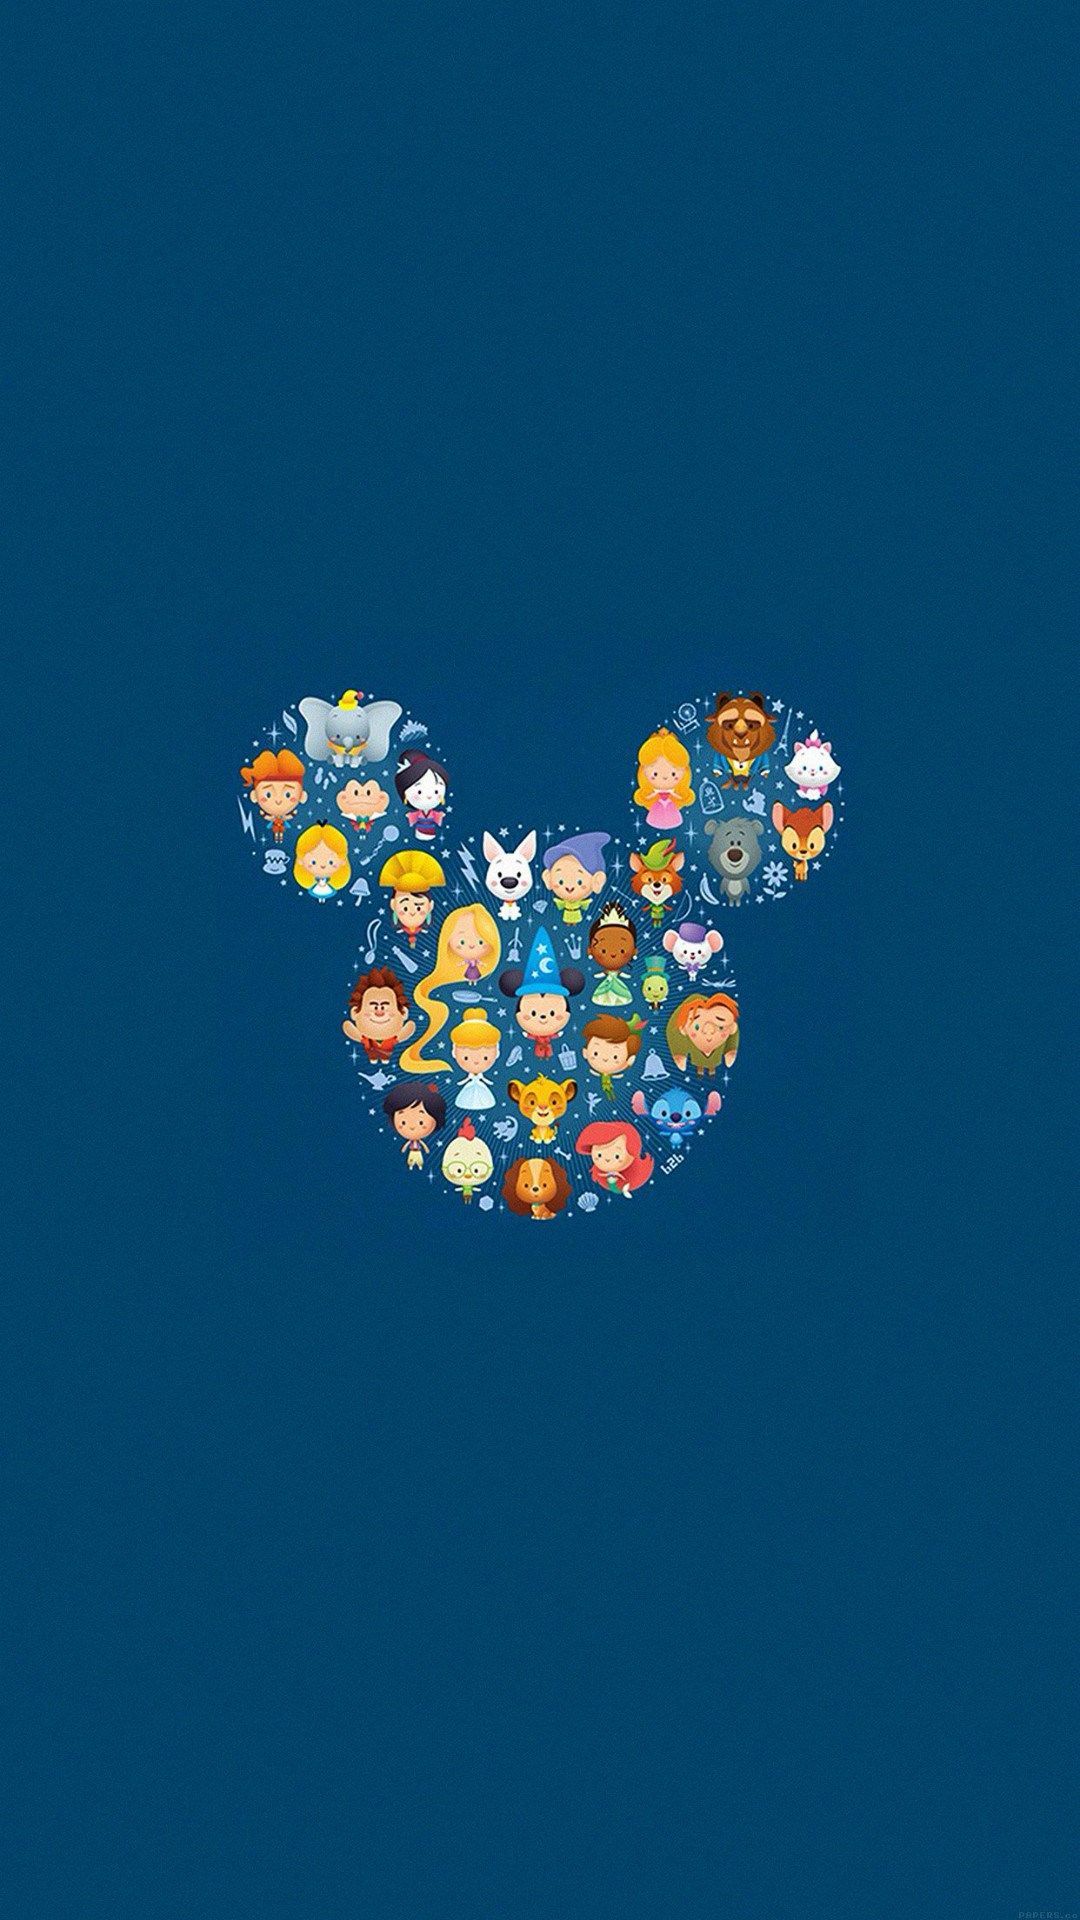 Disney Characters iPhone Wallpaper Top